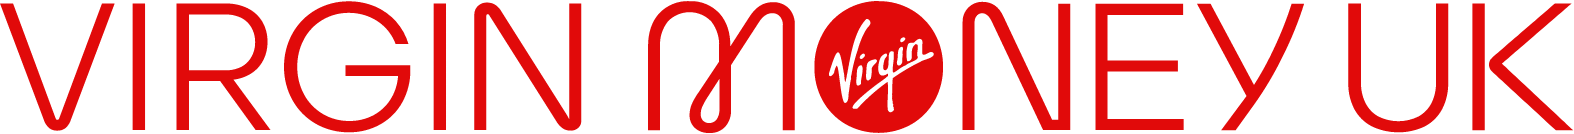 Virgin Money UK logo large (transparent PNG)